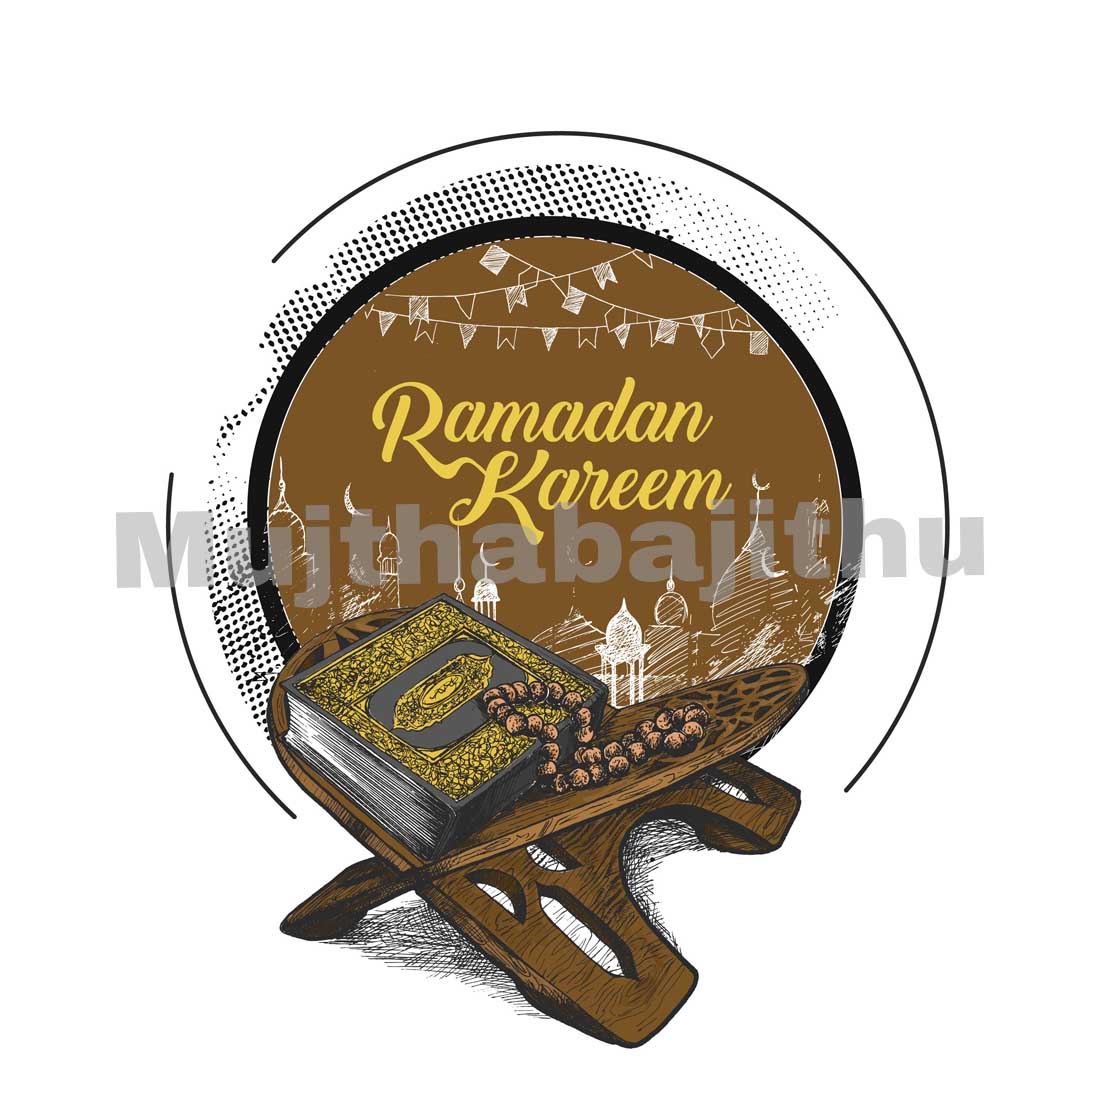 Ramadan kareem with a book and rosary.